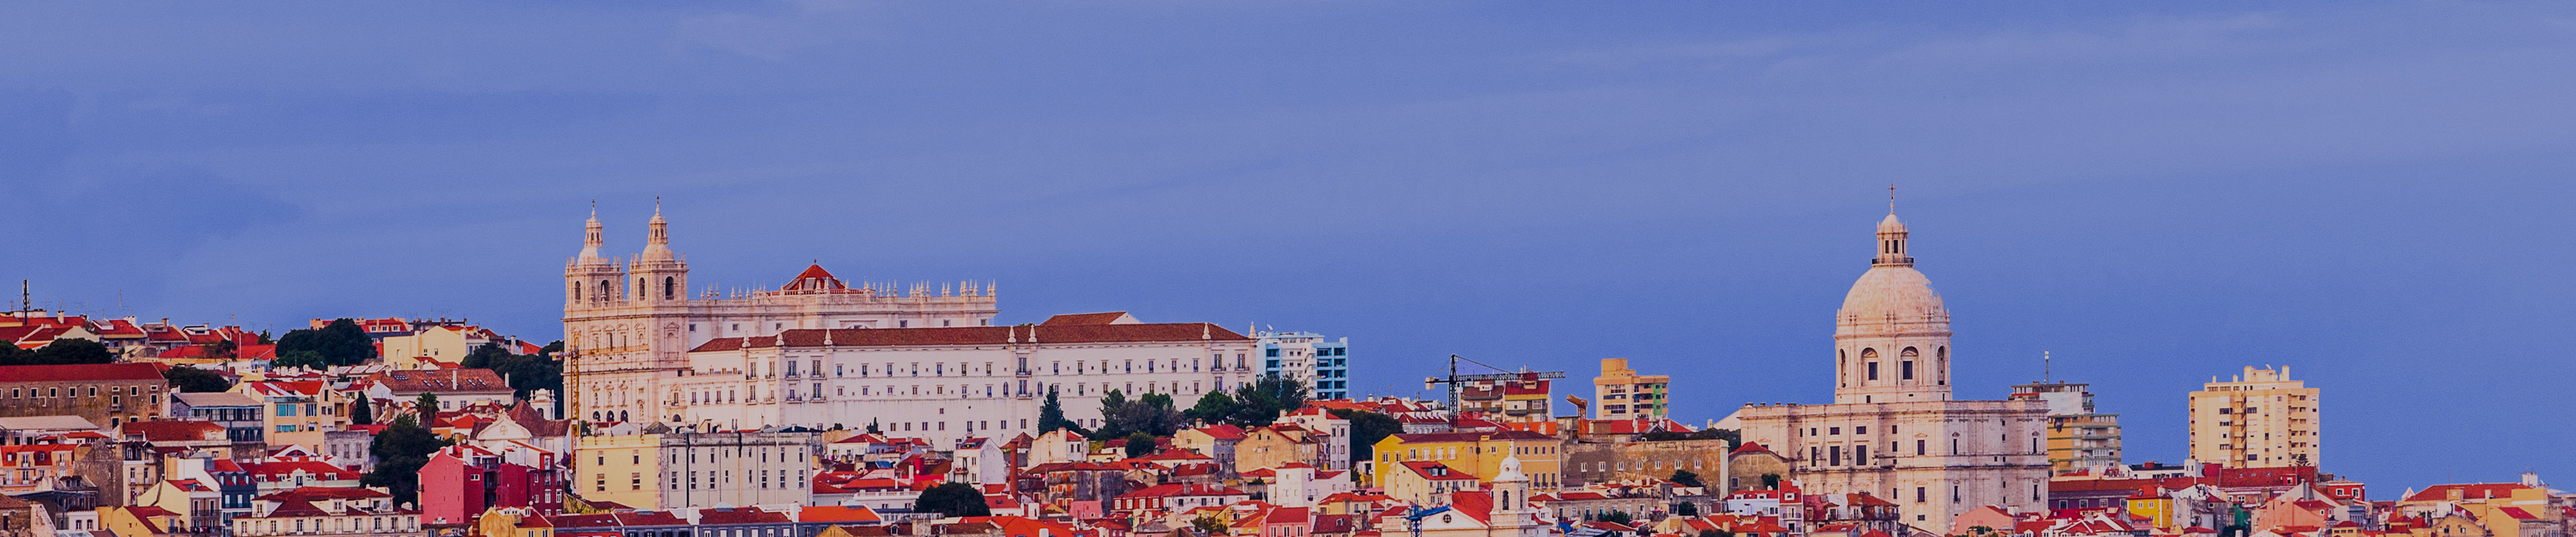 Best Digital Marketing Agencies in Lisbon